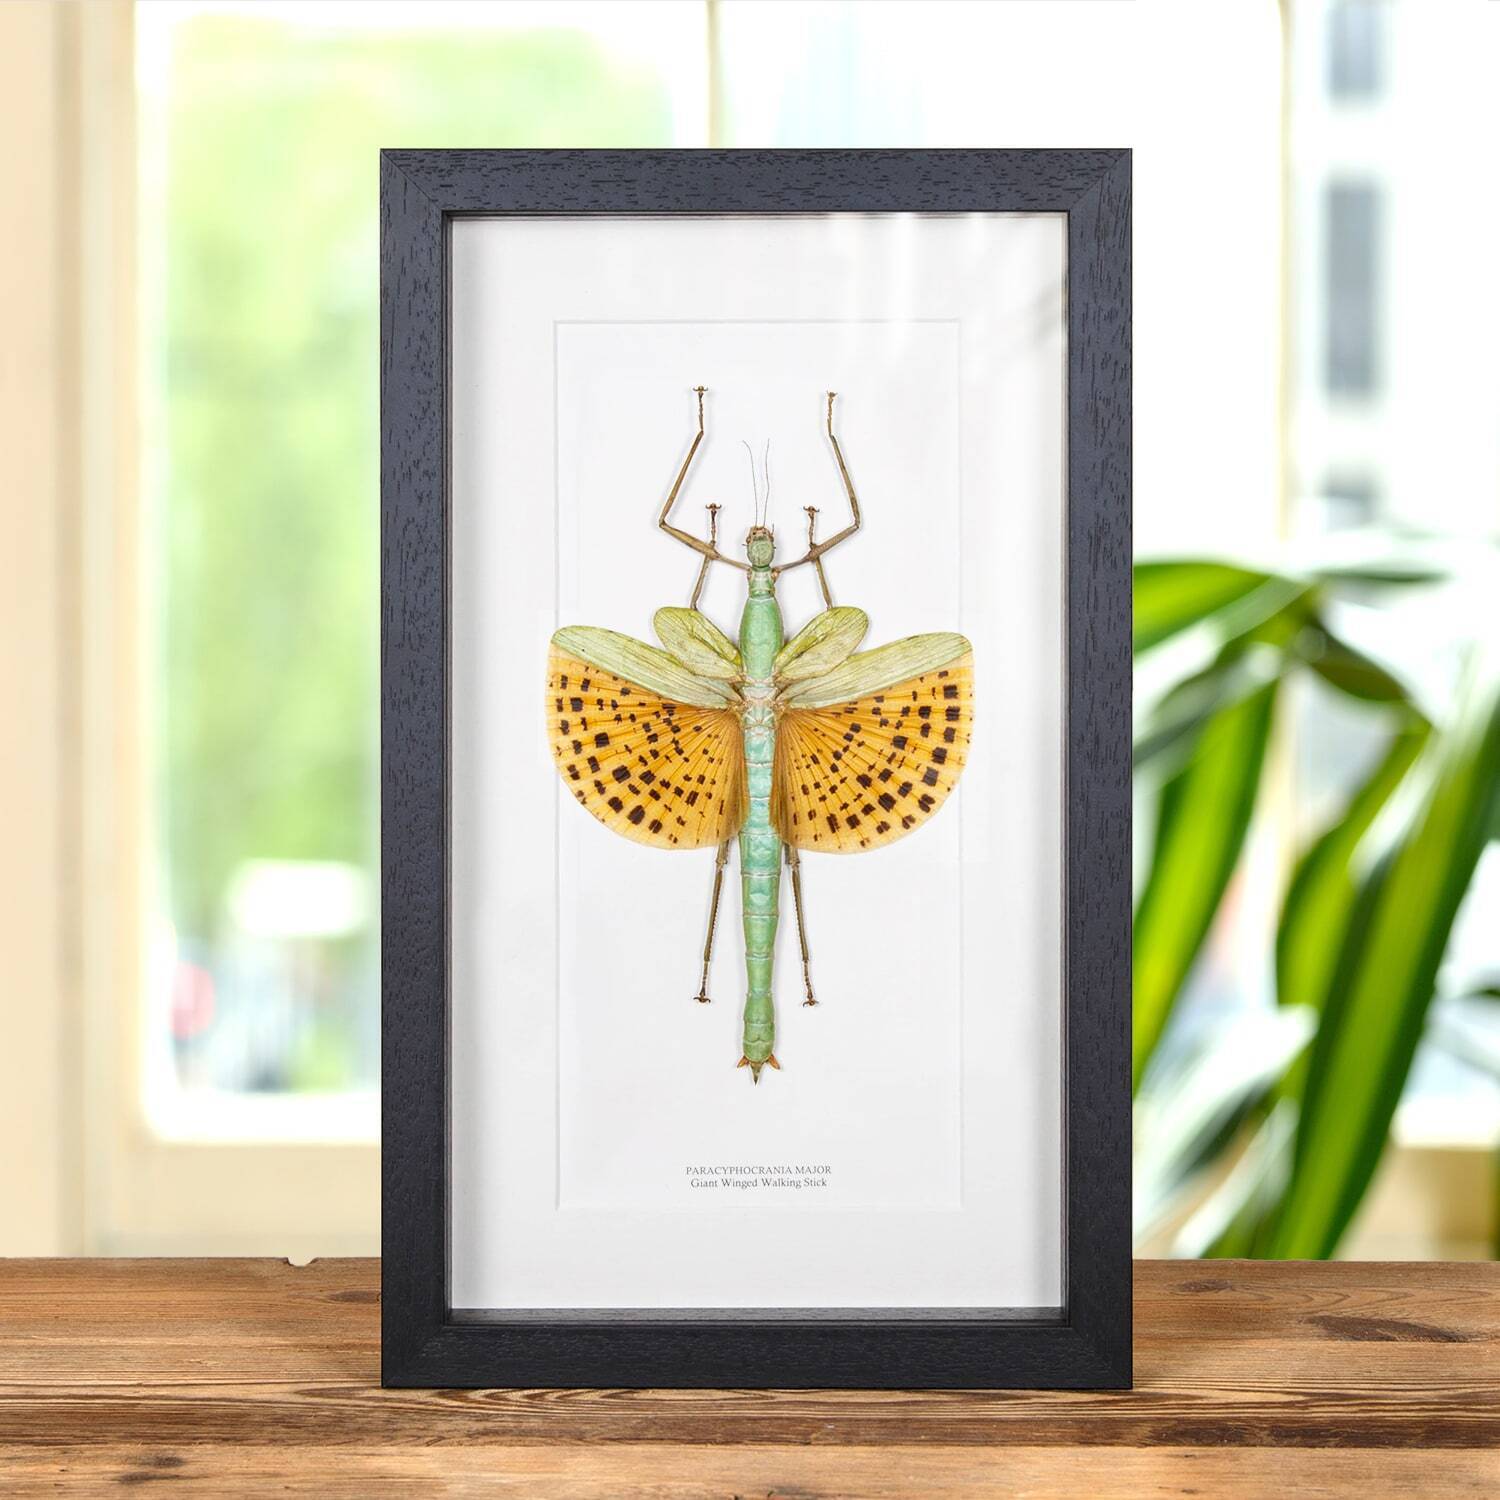 Taxidermy Giant Winged Walking Stick Frame (Paracyphocrania major)